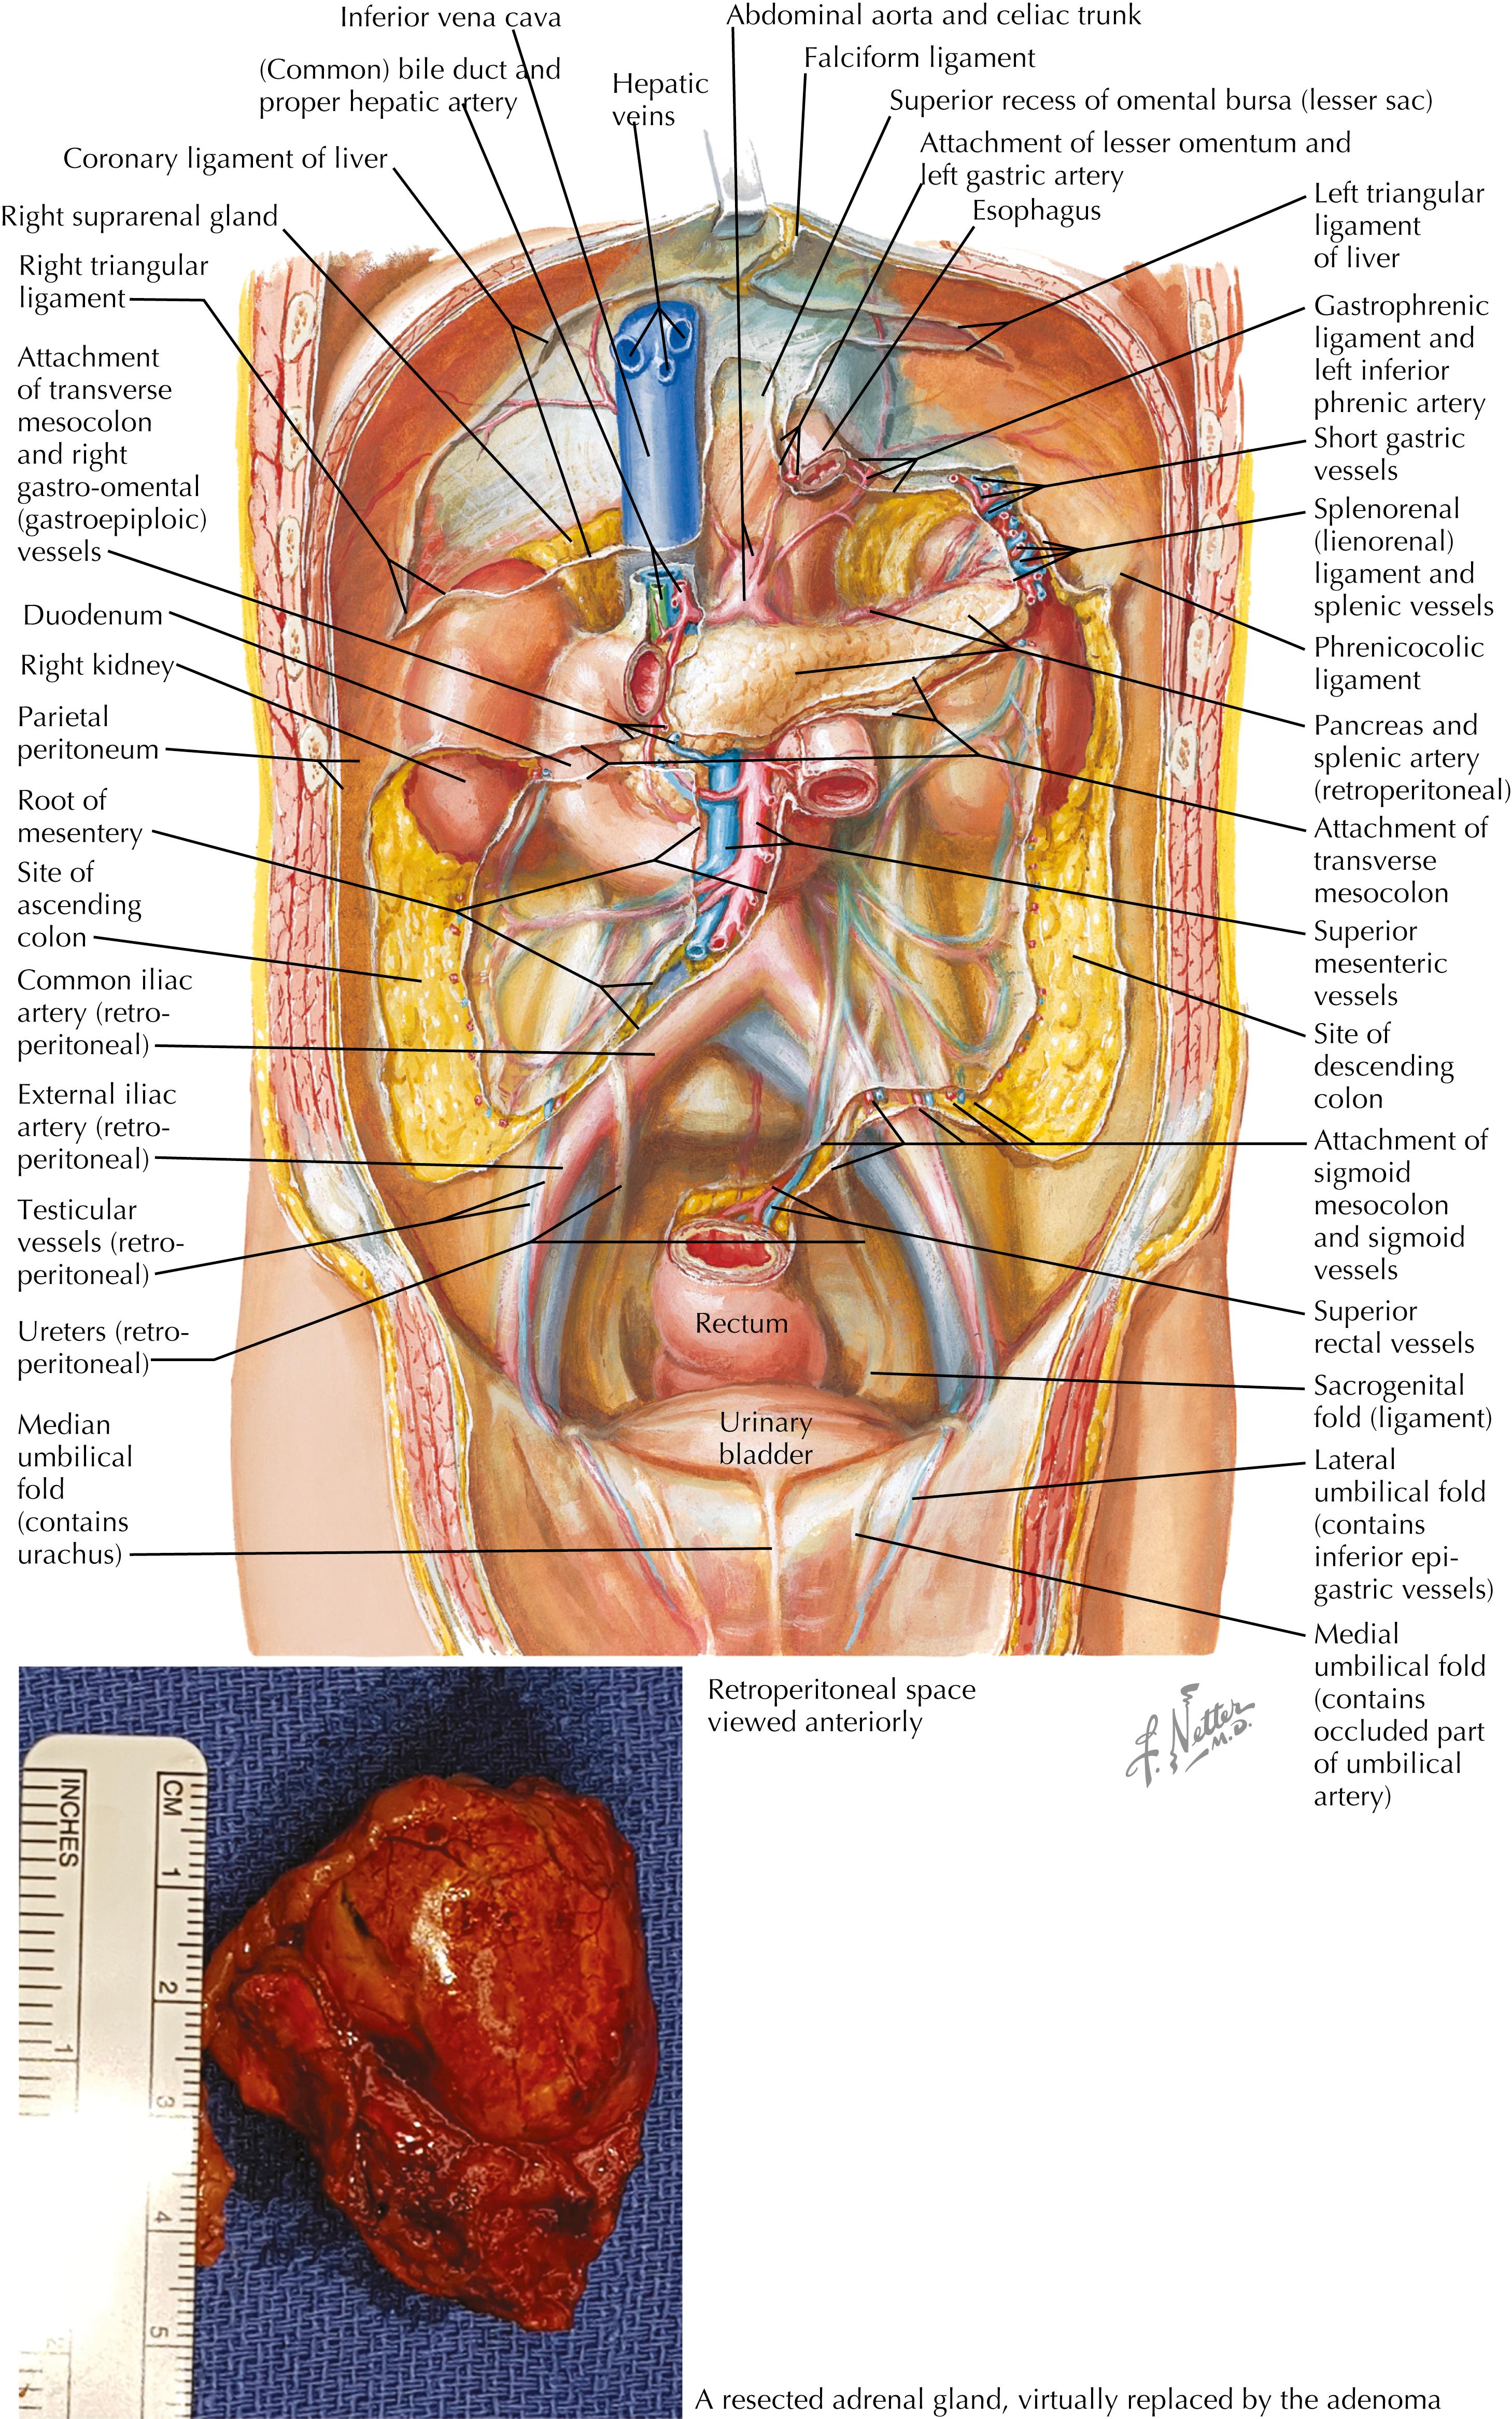 FIGURE 4.2, Peritoneum of posterior abdominal wall.